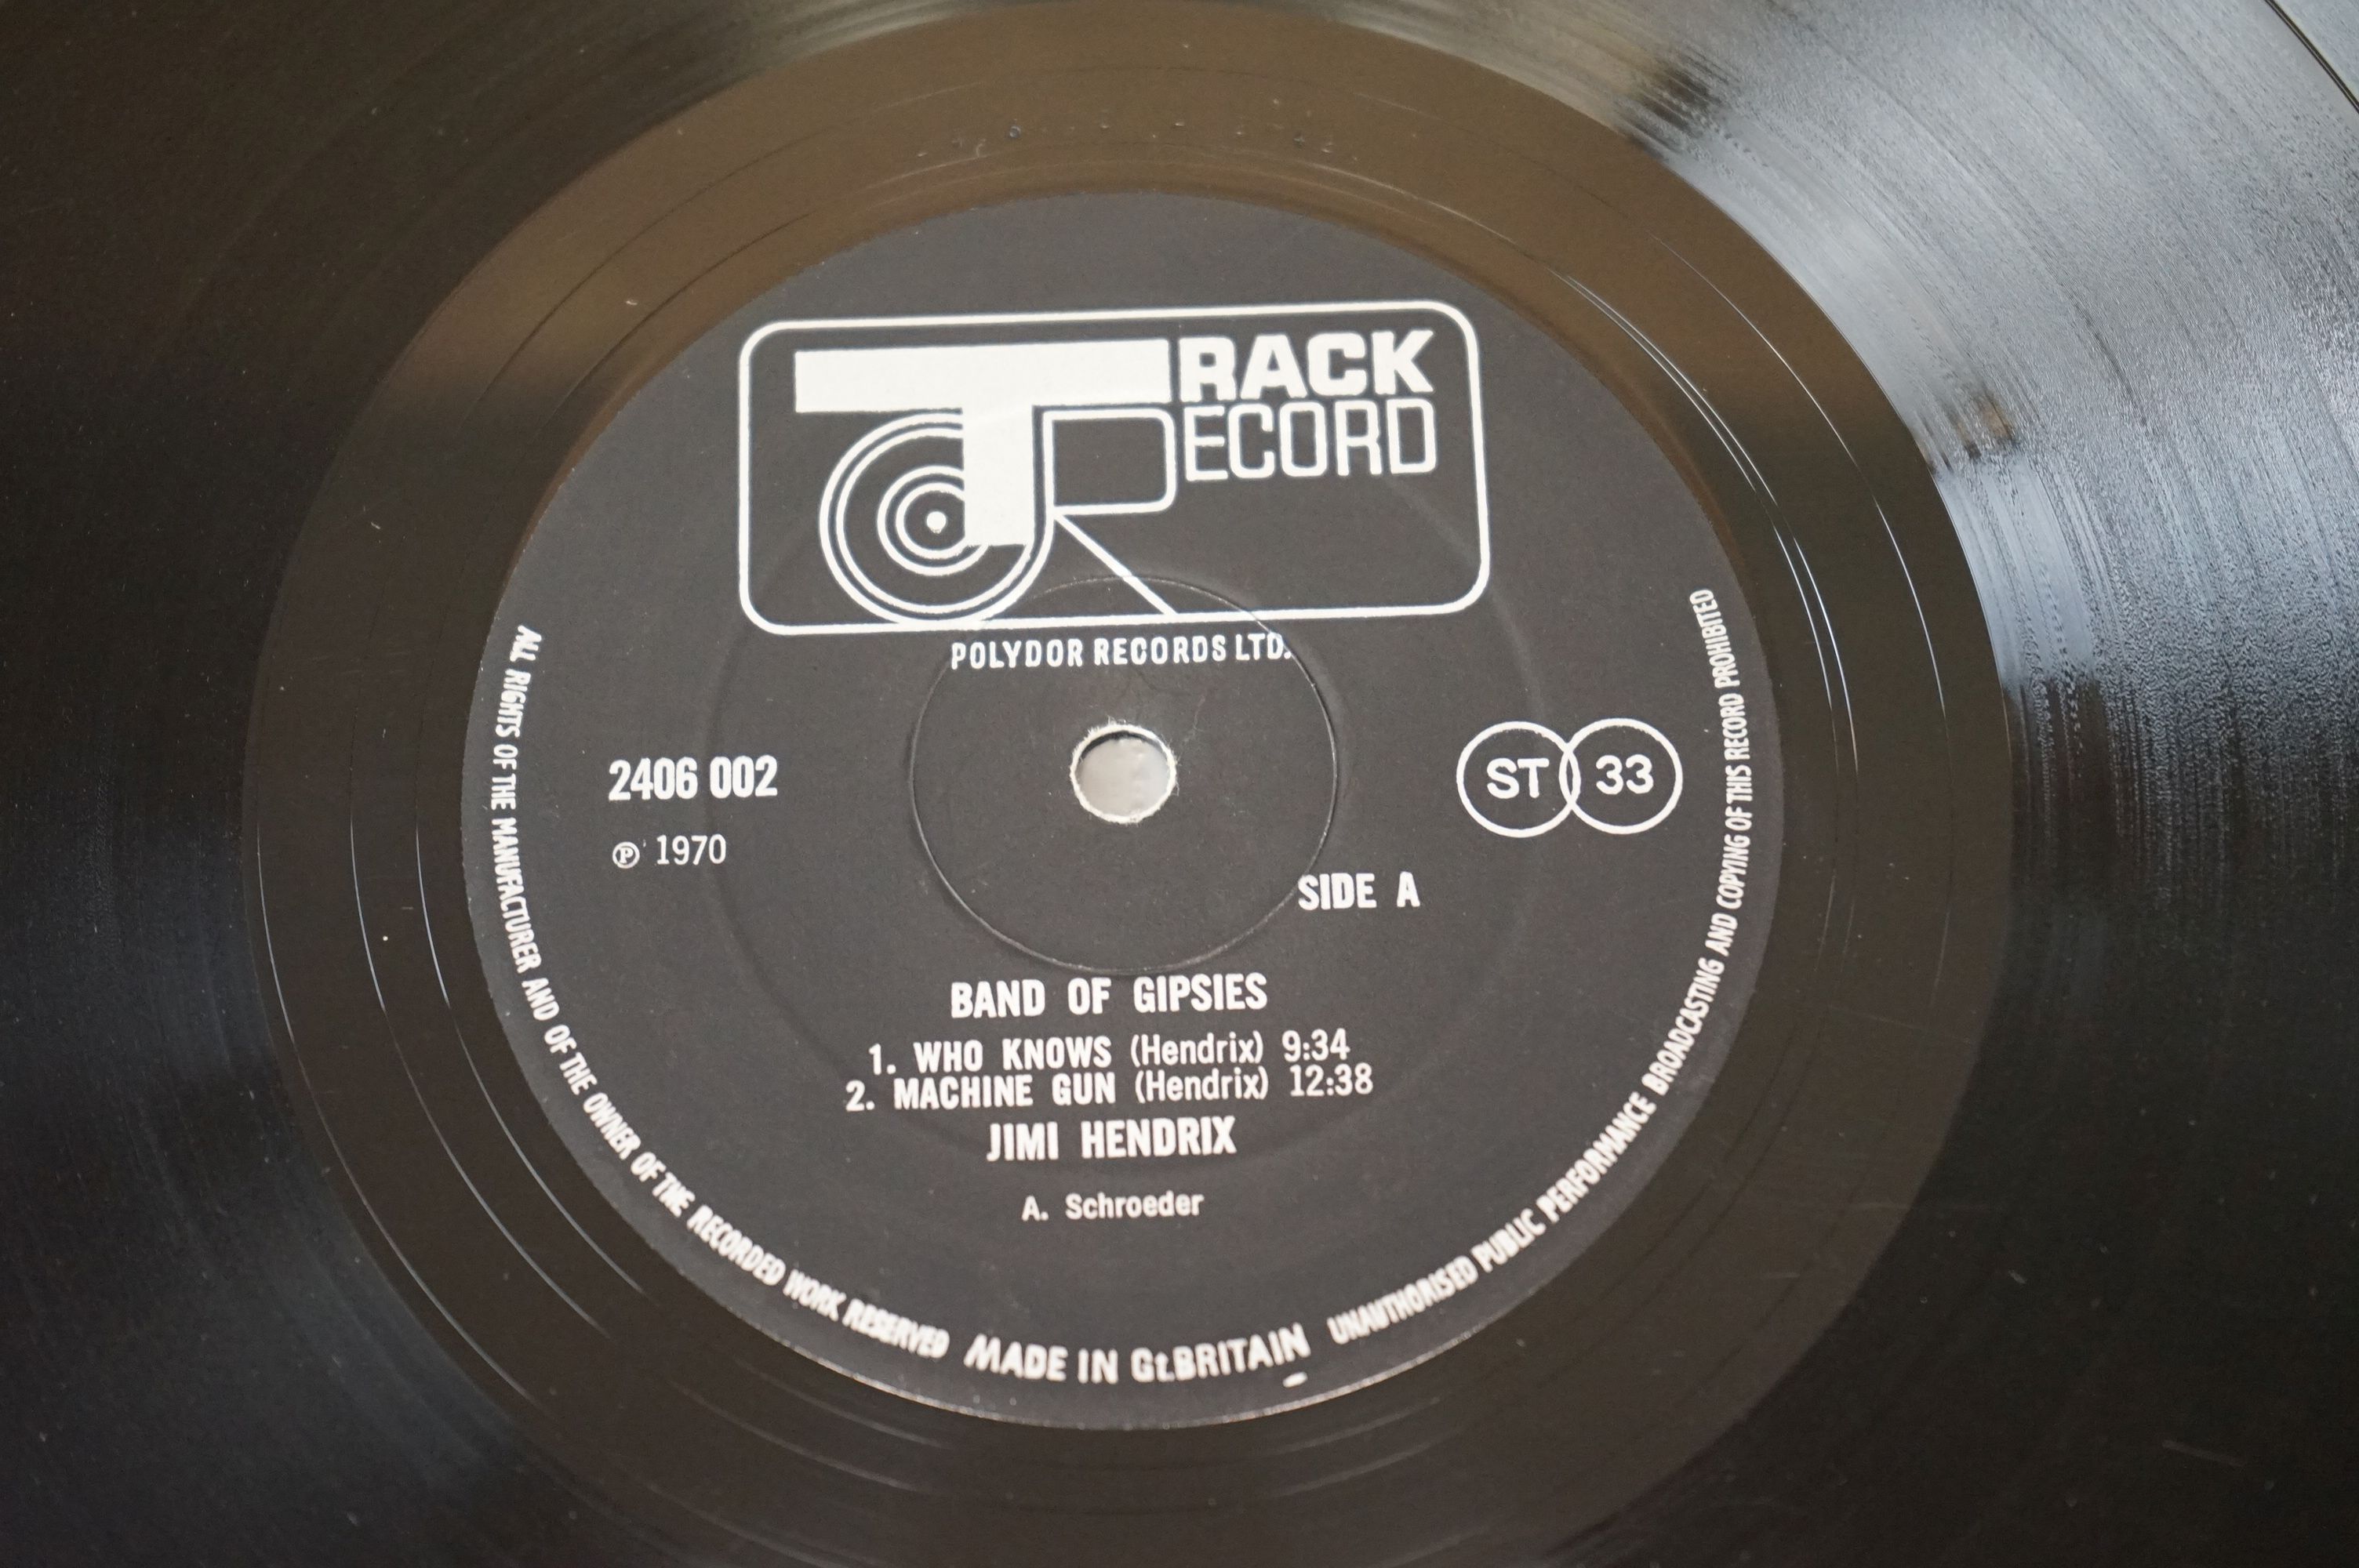 Vinyl - Jimi Hendrix Band Of Gypsys on Track 2406 002 'puppet' sleeve. Vg+ - Image 3 of 6